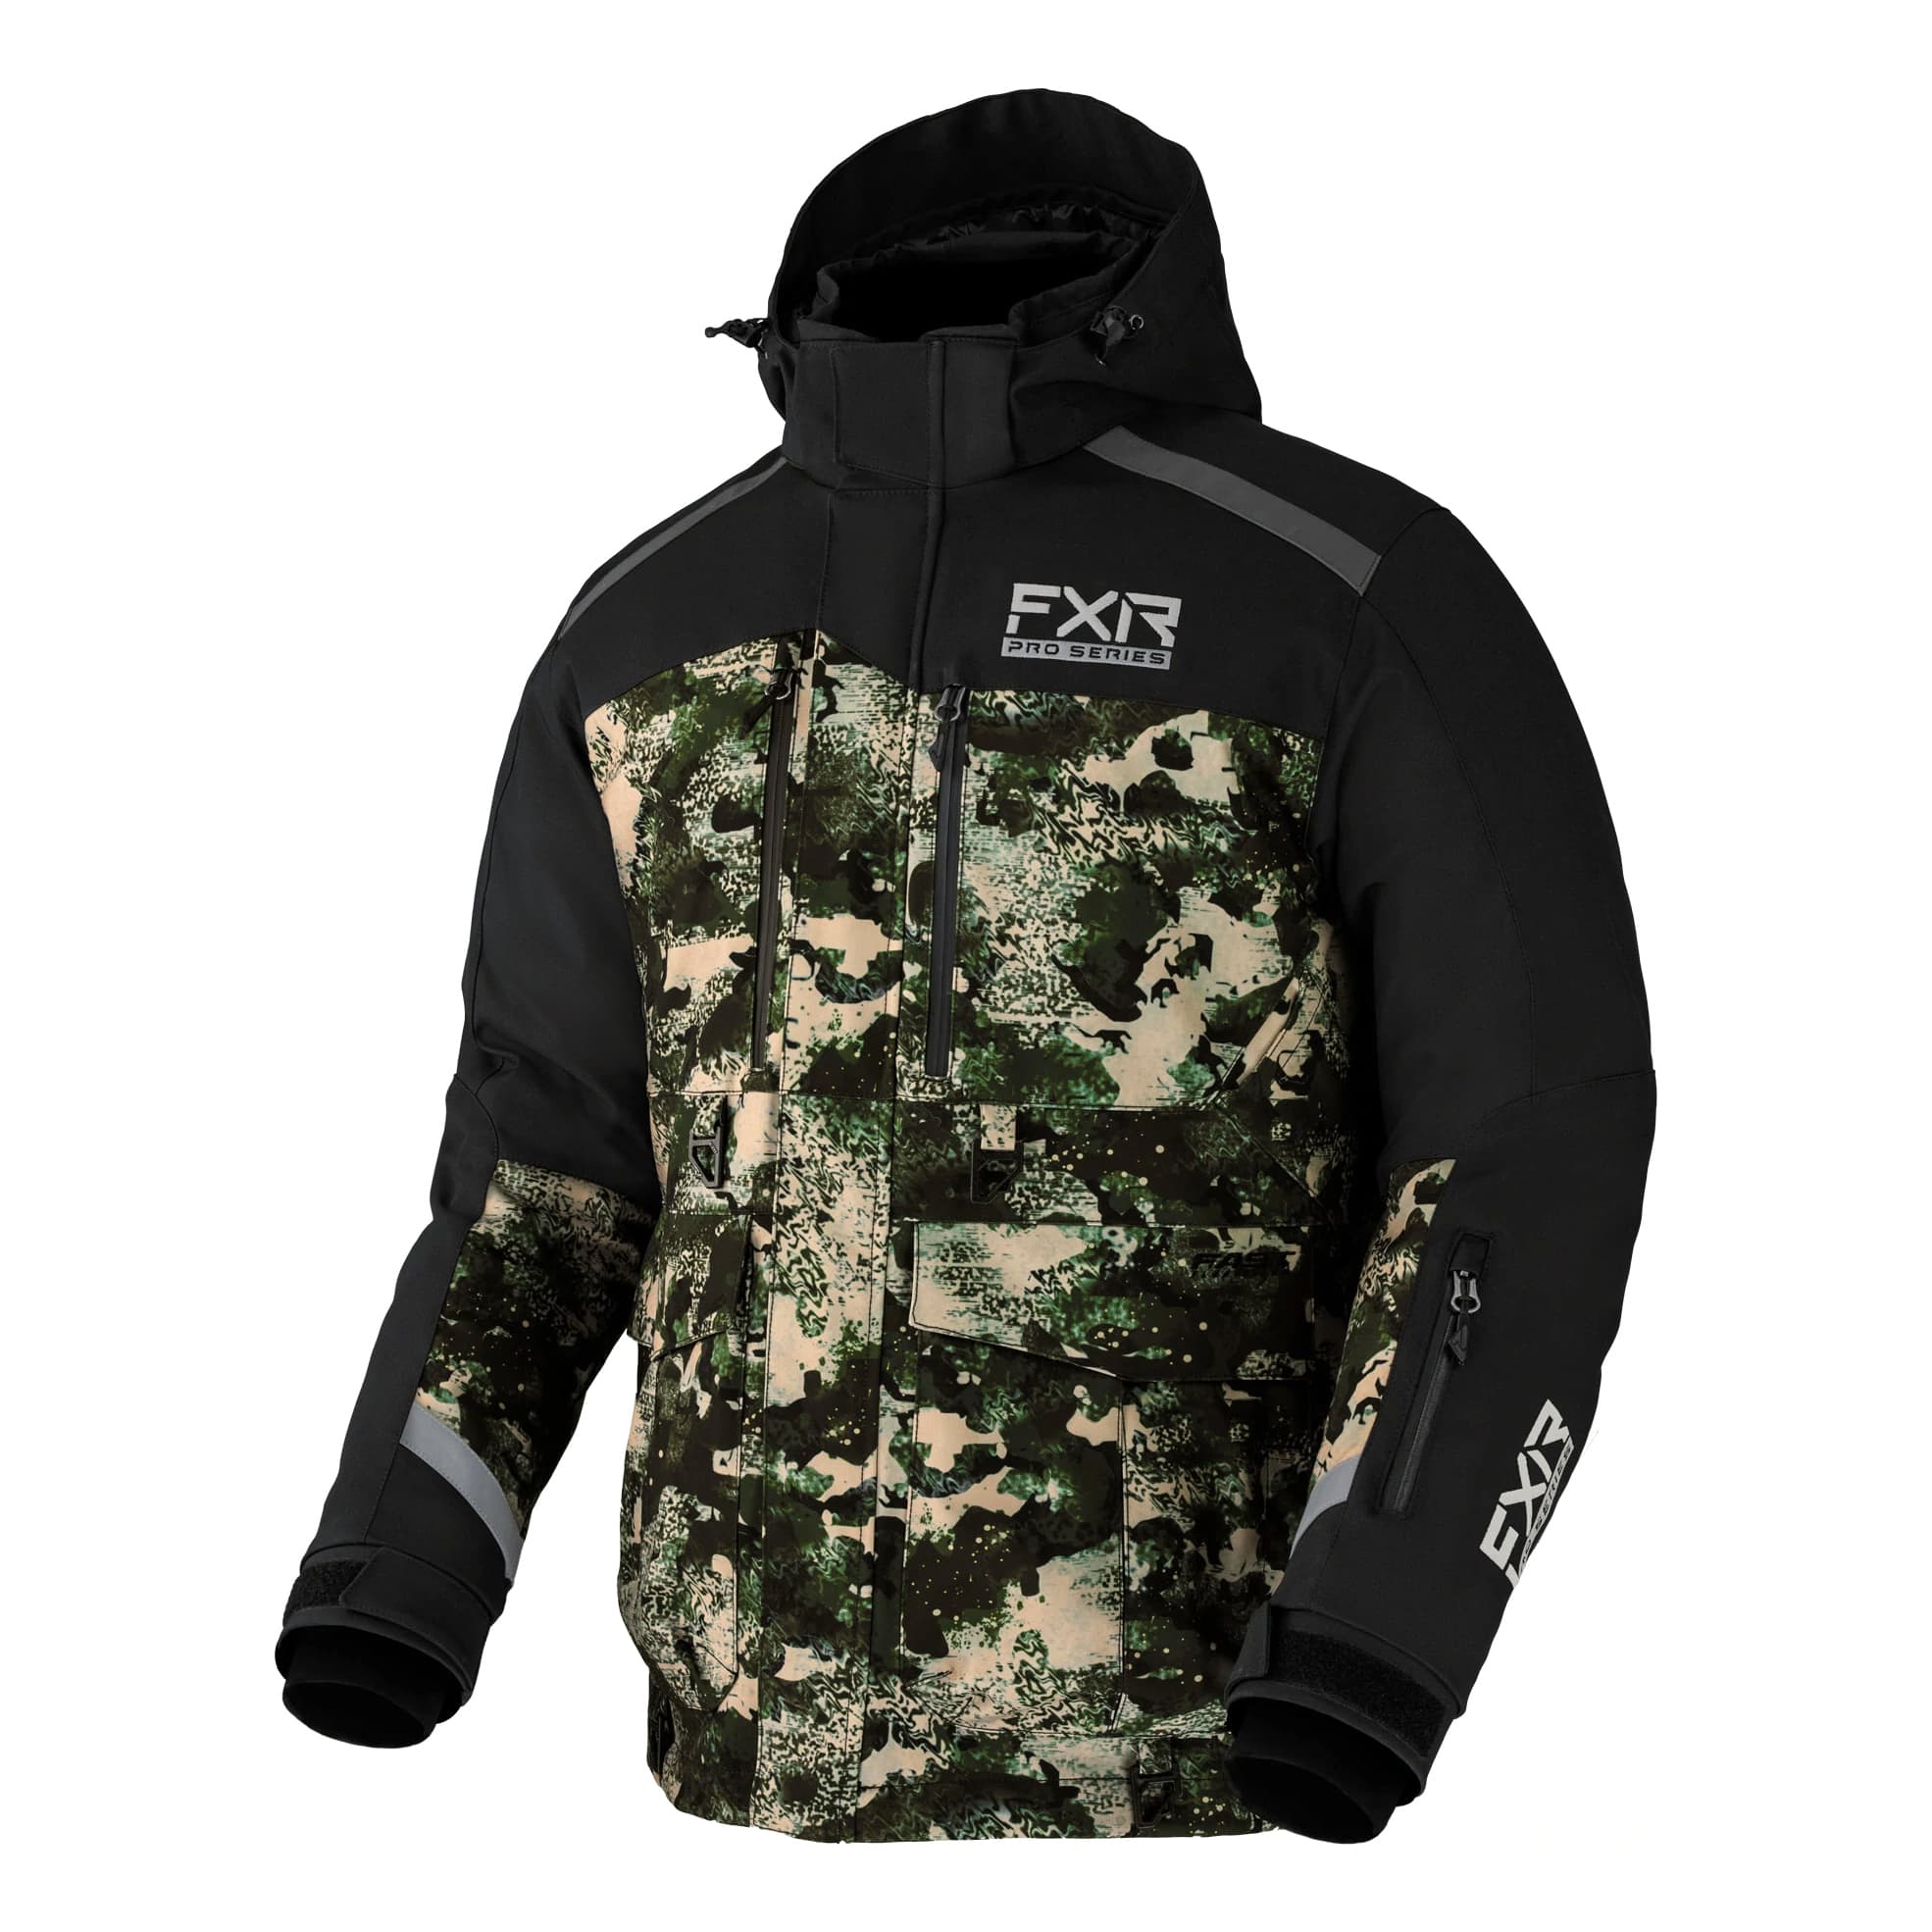 FXR Expedition X Ice Pro Jacket Black/Army Camo / L